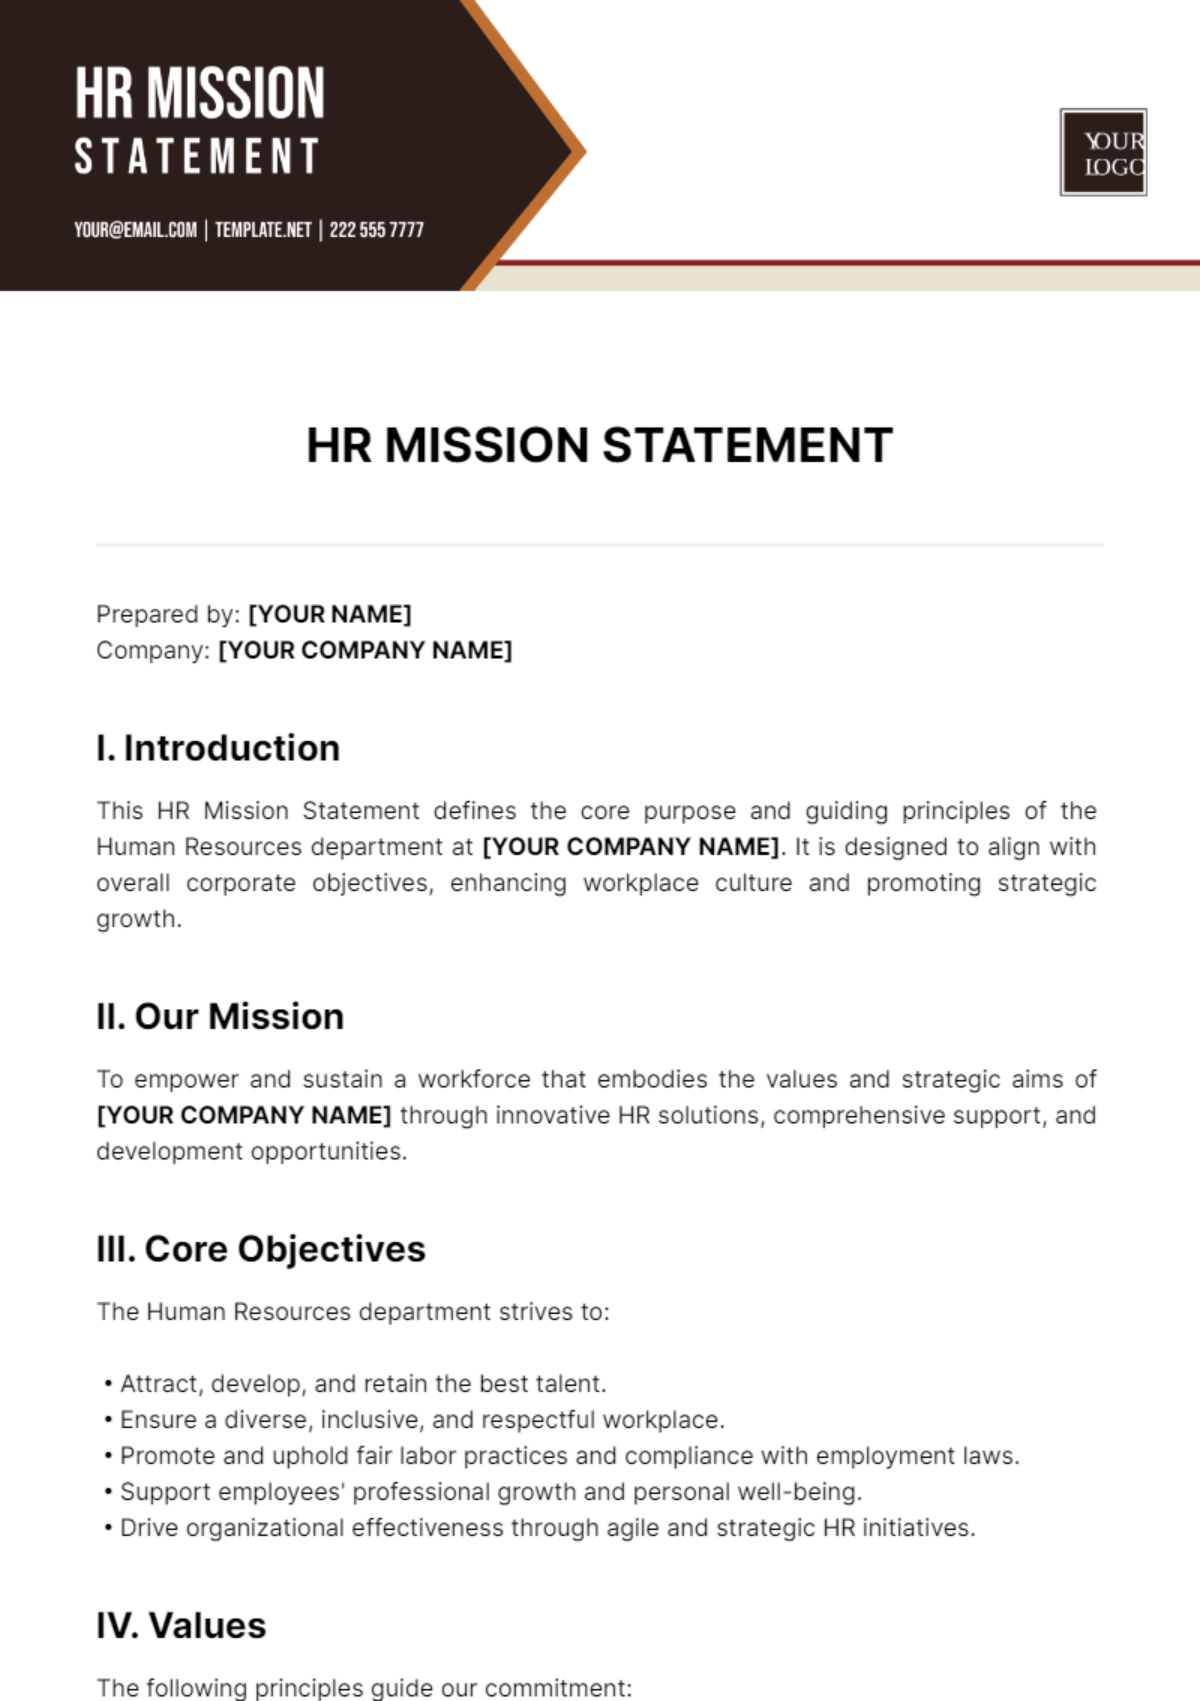 HR Mission Statement Template